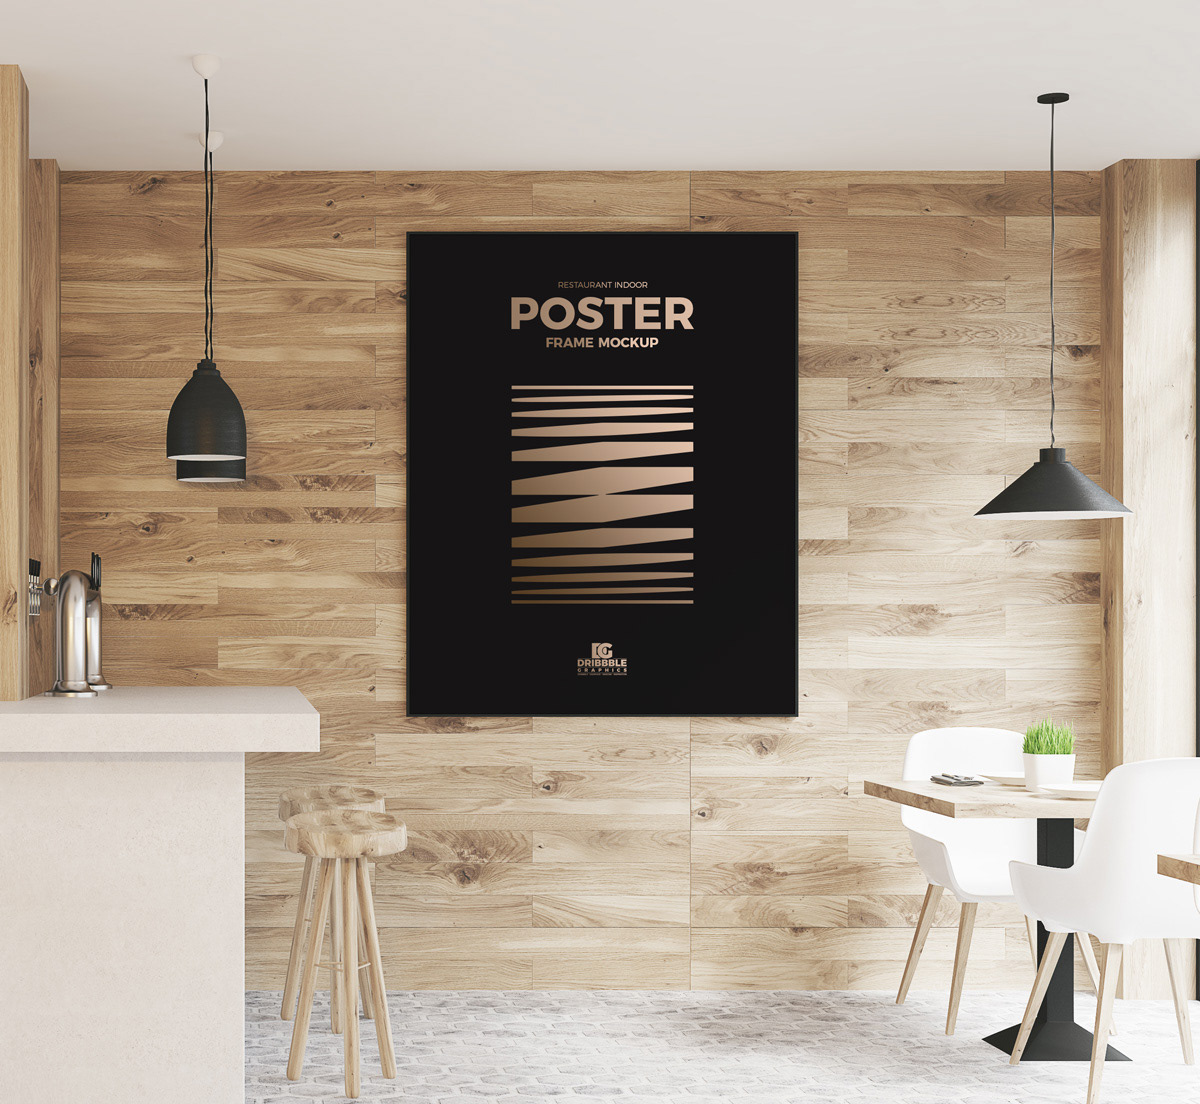 Download Free Restaurant Indoor Wooden Wall Poster Frame Mockup On Behance PSD Mockup Templates